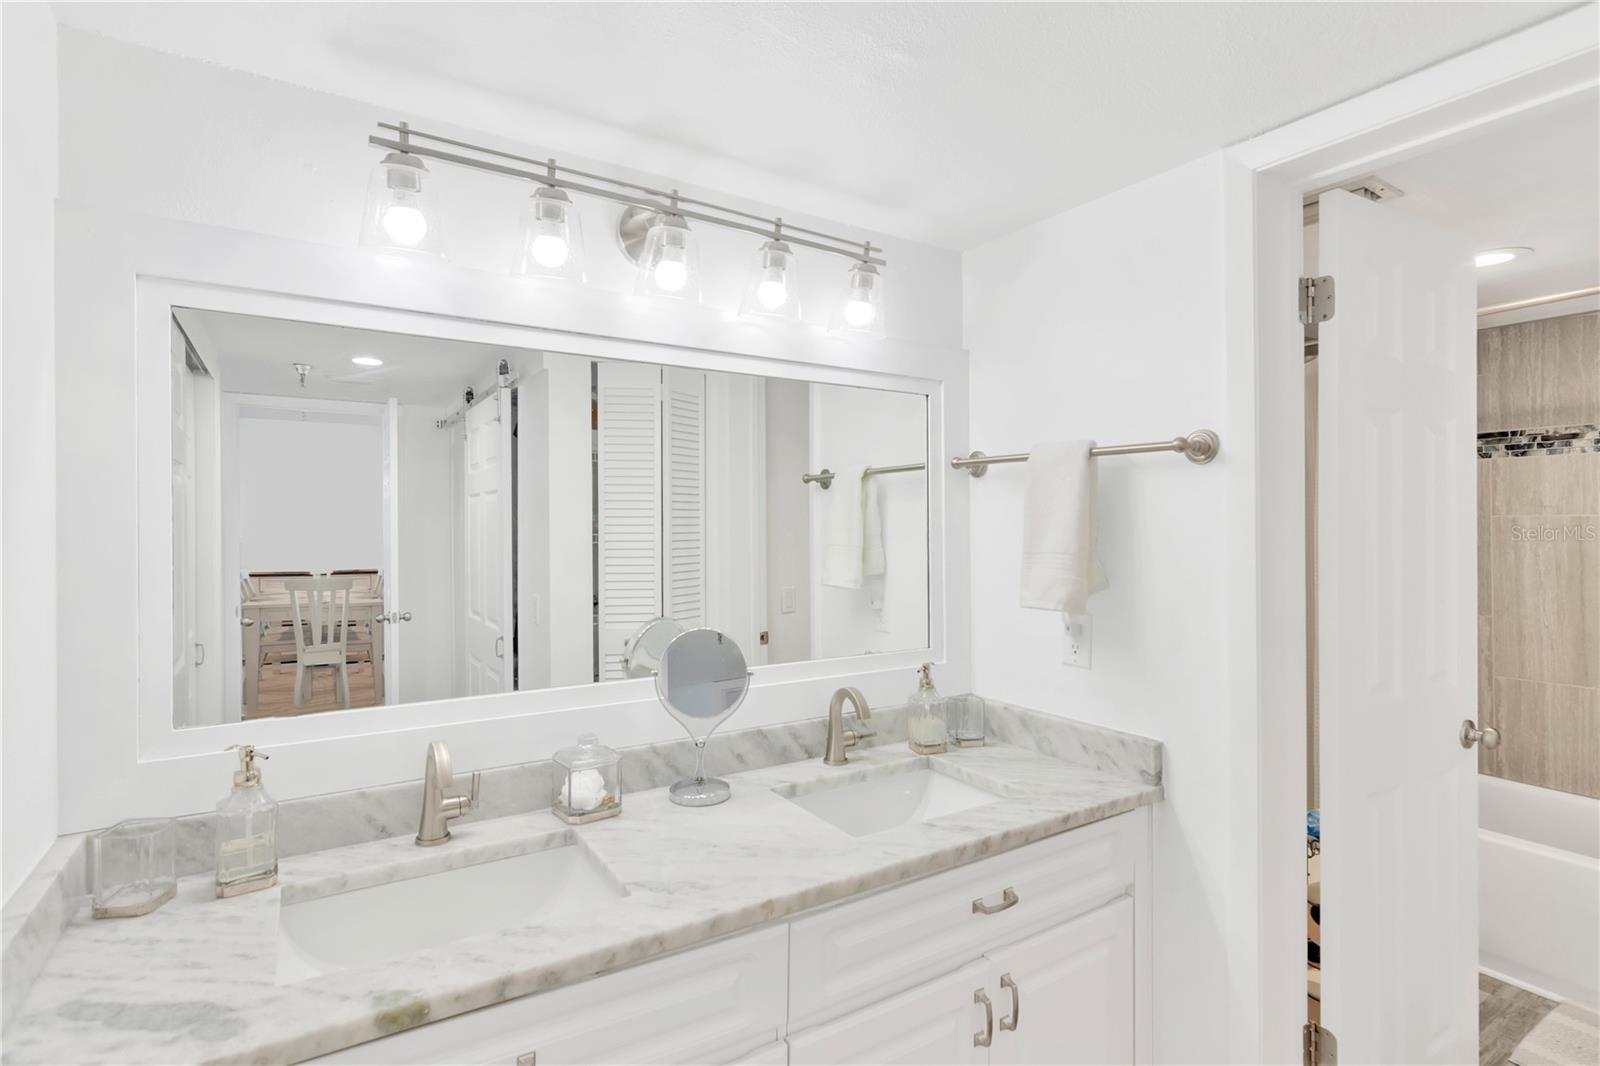 Dual sink vanity, custom lighting and lower cabinet space for storage.